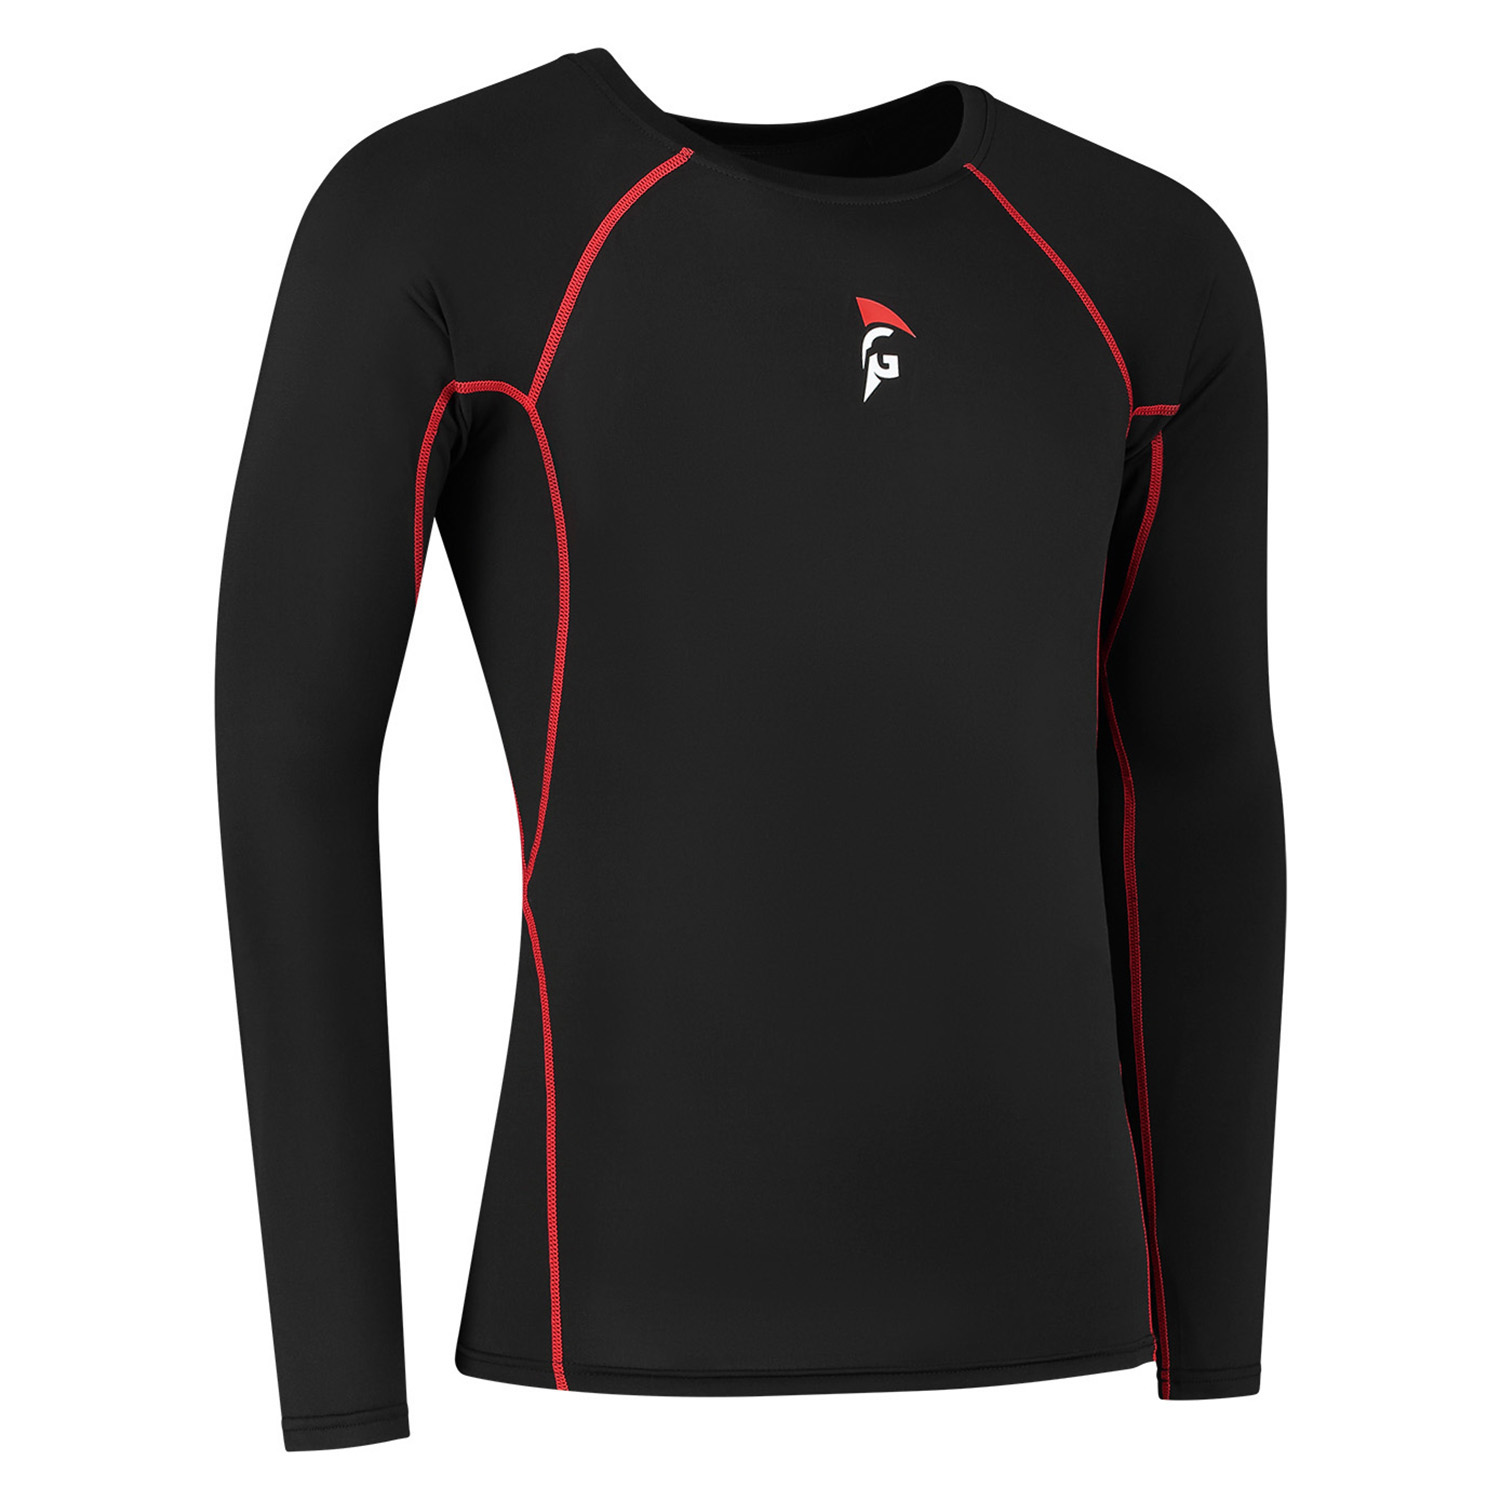 Gladiator Sports Thermal Shirt - Longsleeve